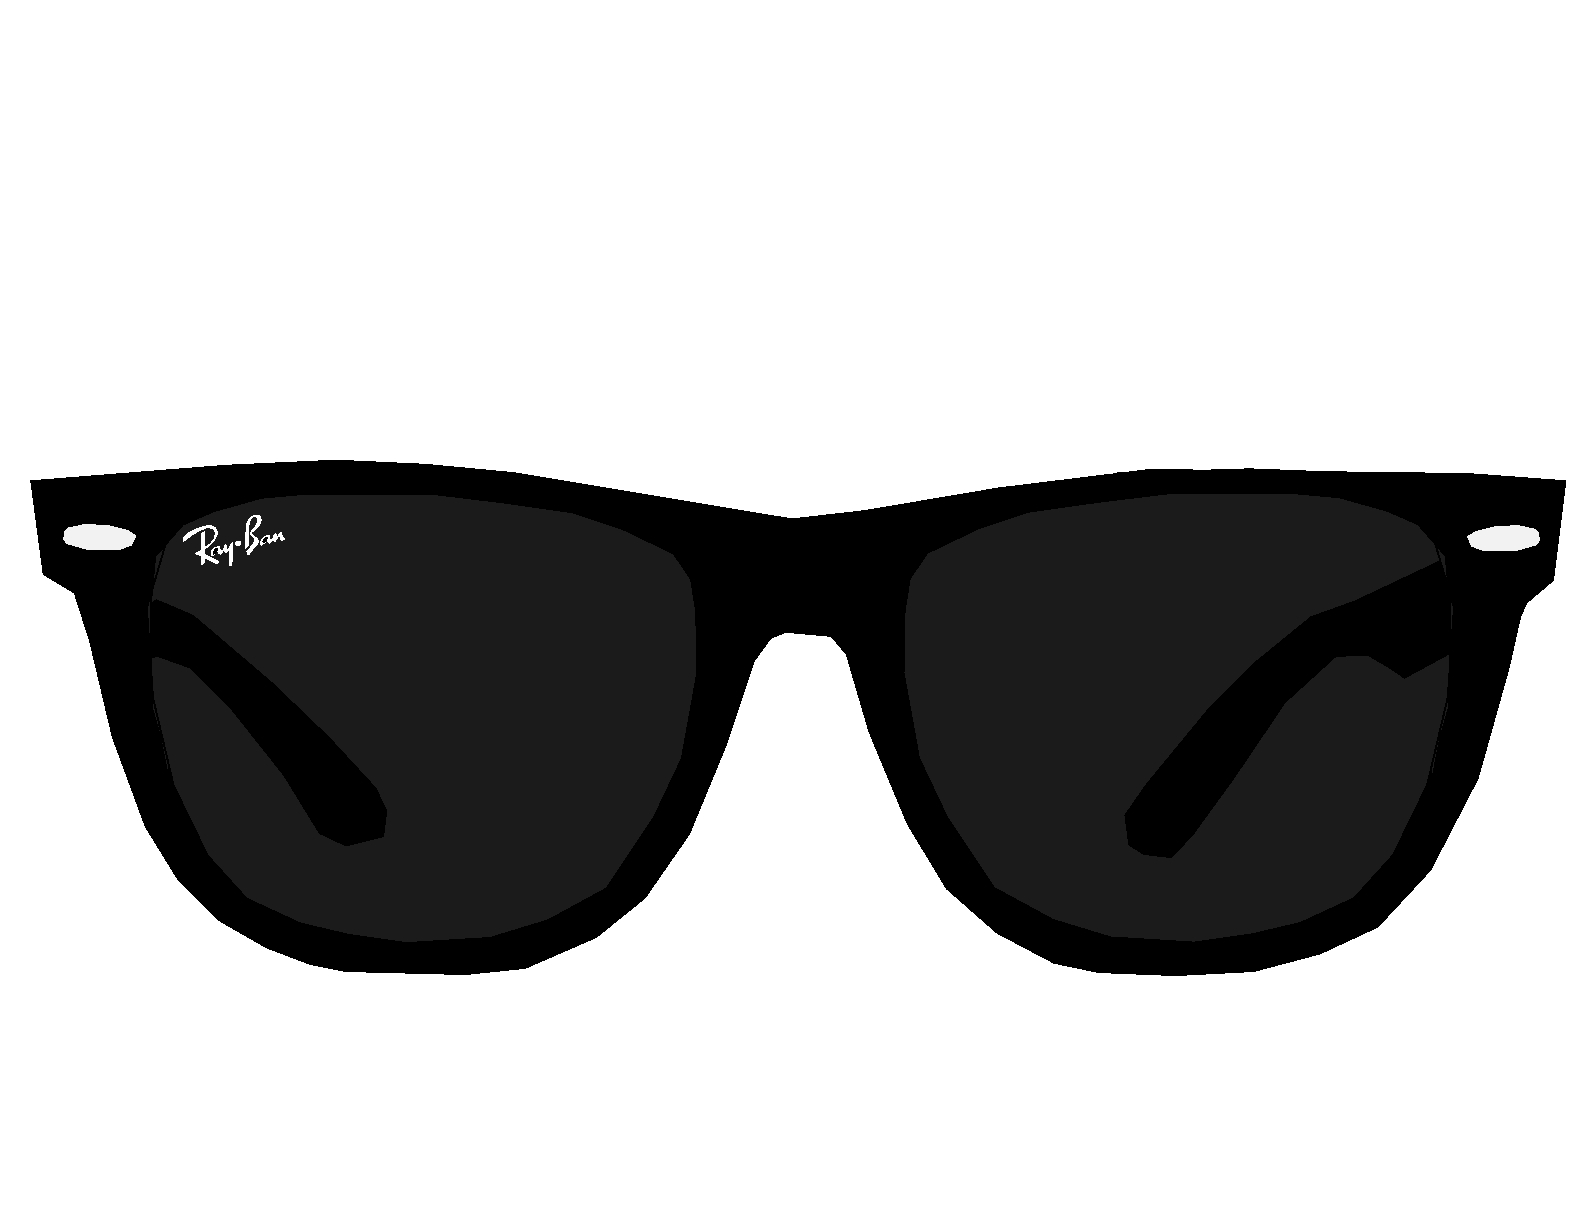 Cartoon sunglasses clipart